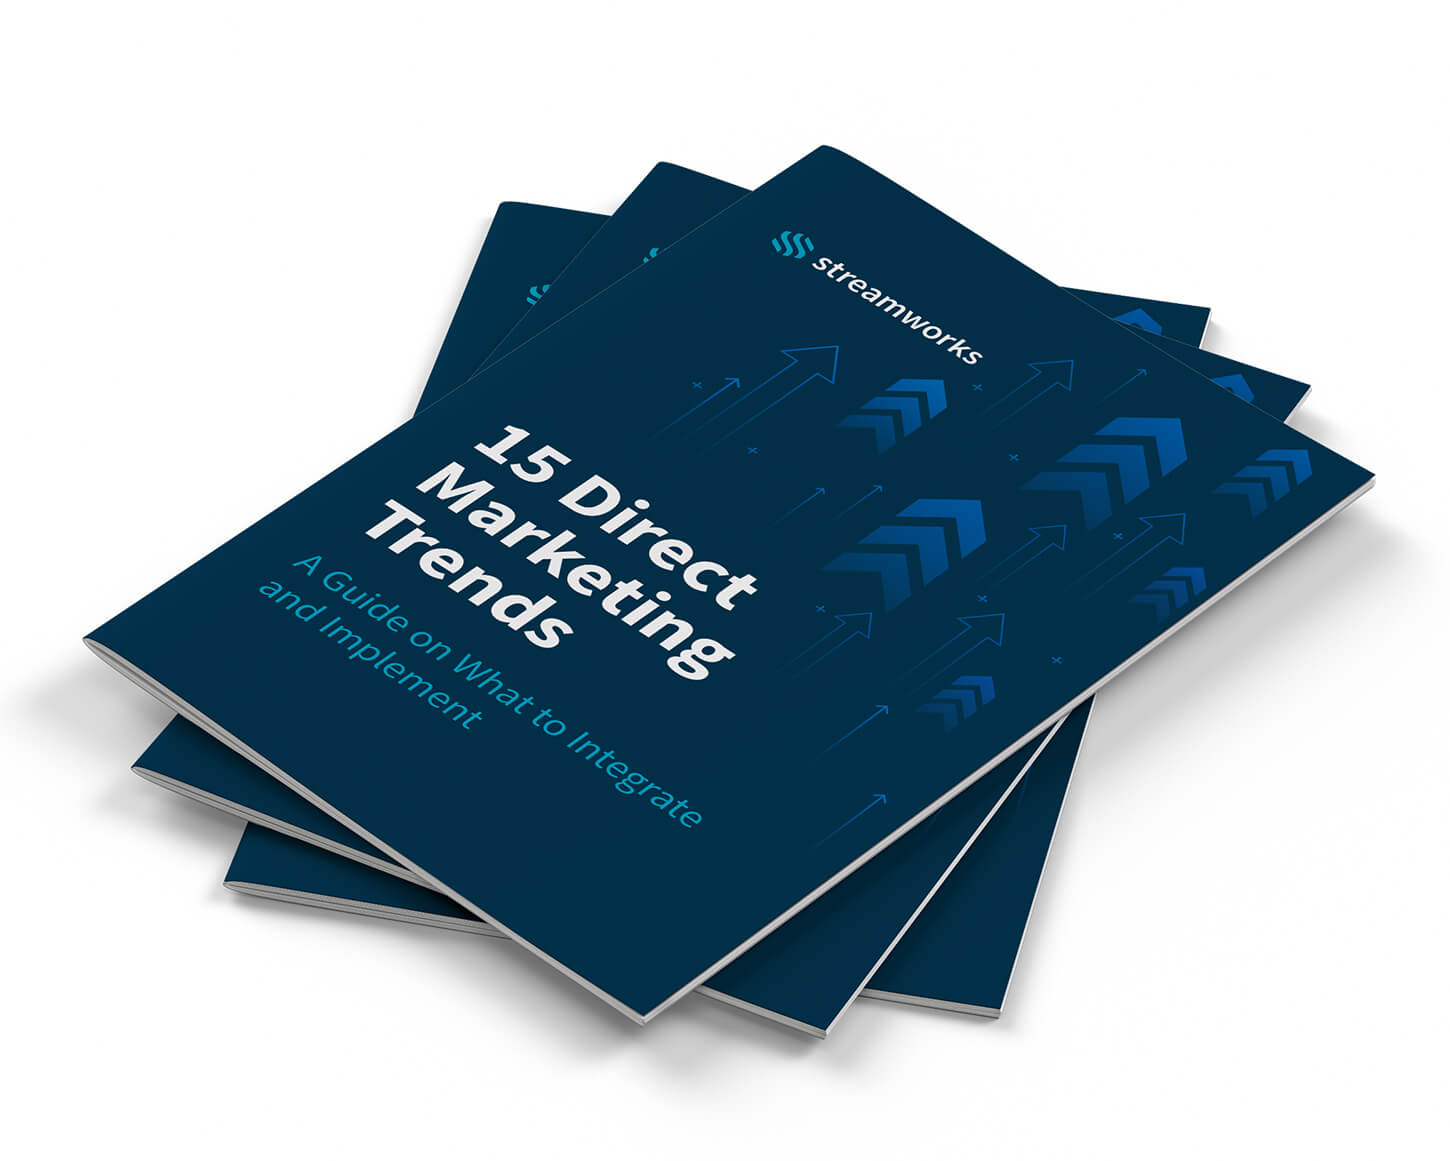 15 Direct Marketing Trends ebook